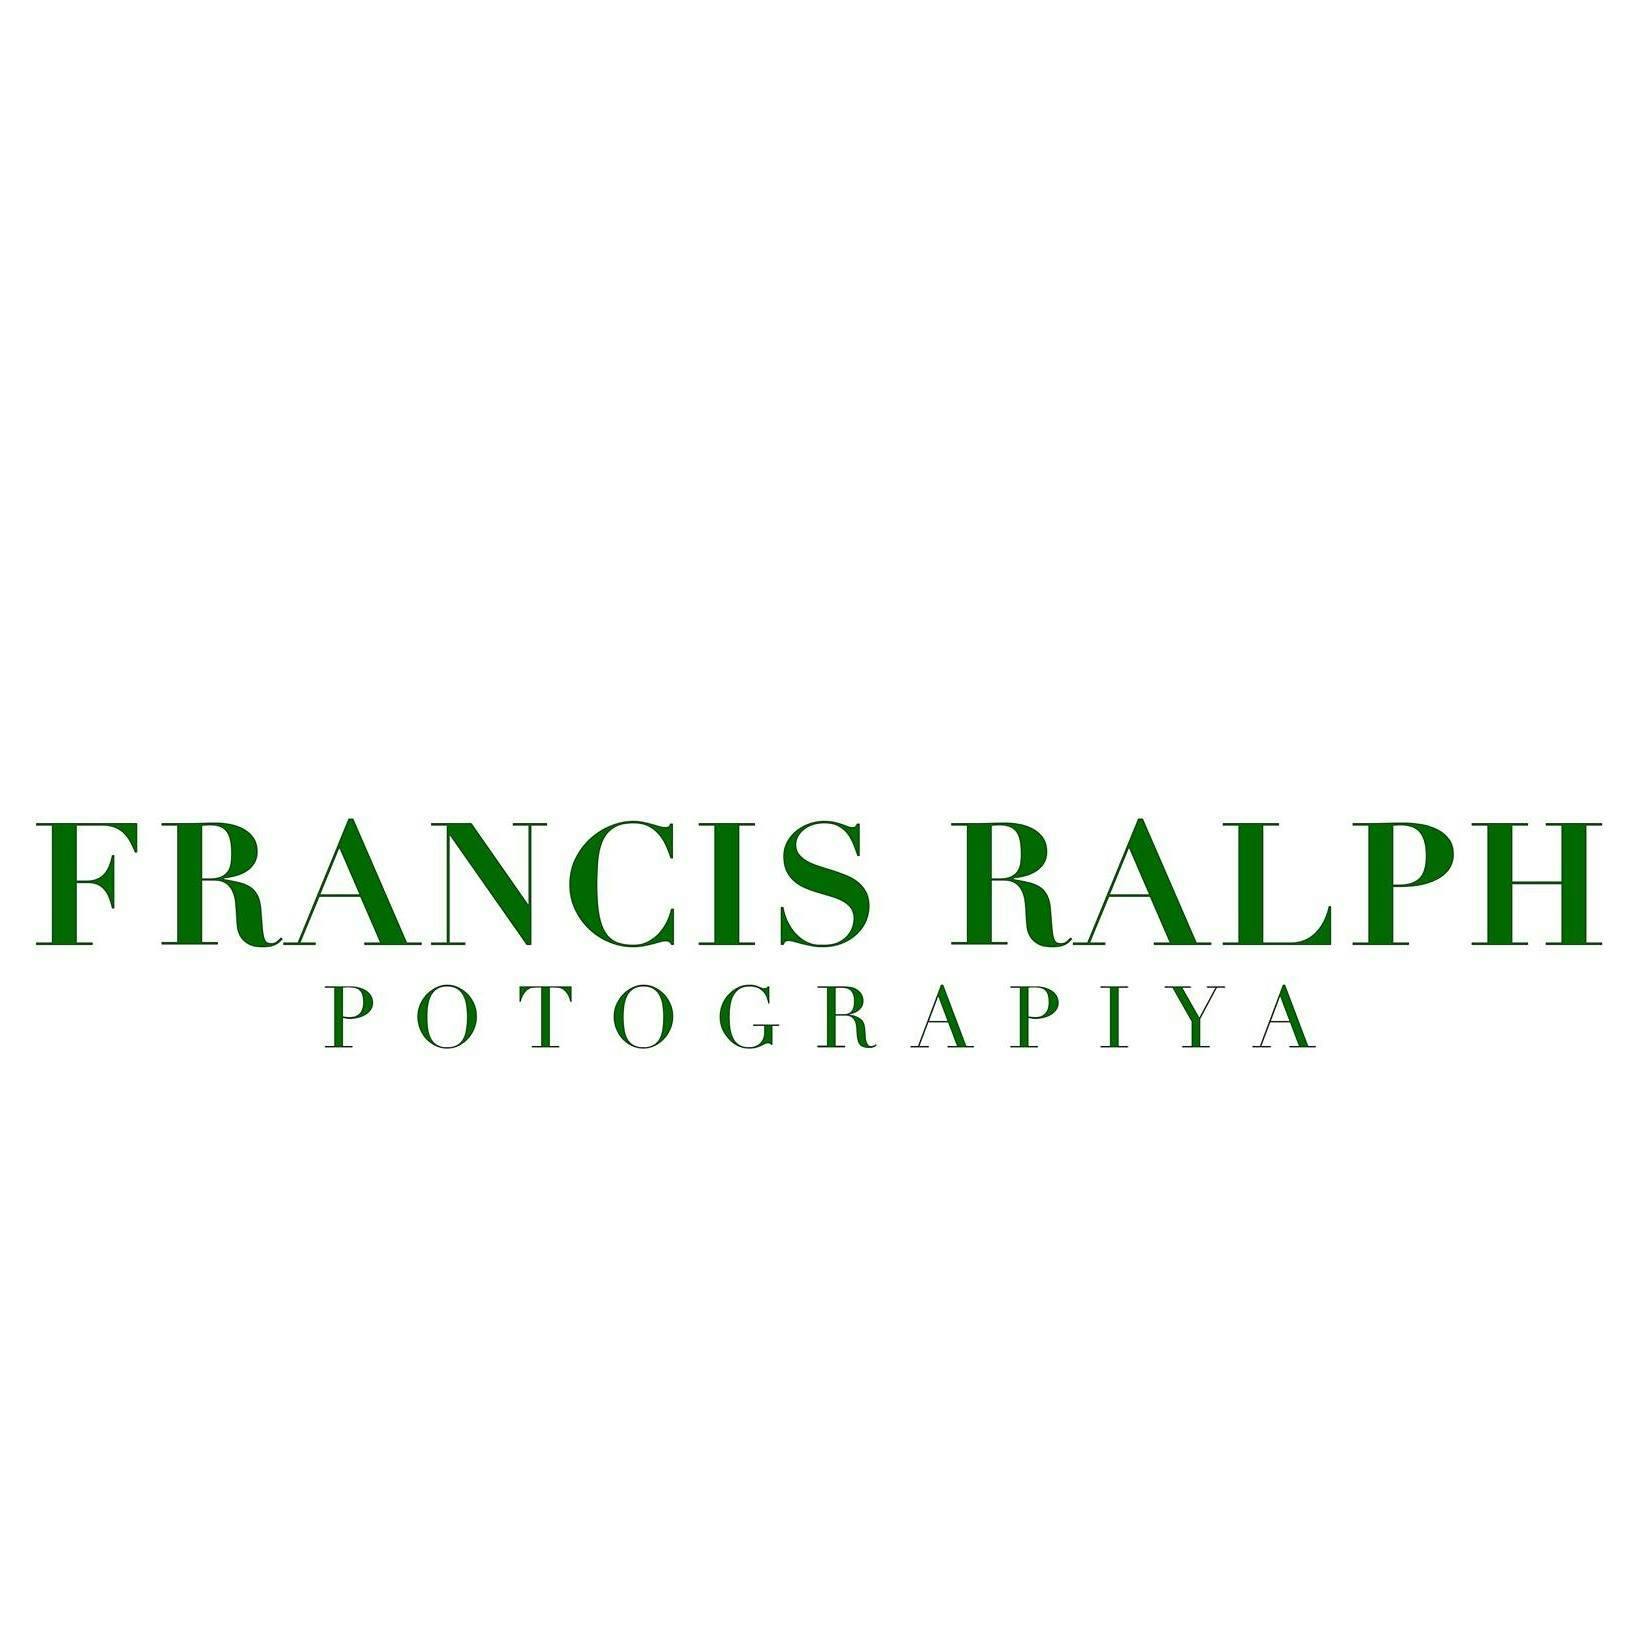 Francis Ralph Potograpiya